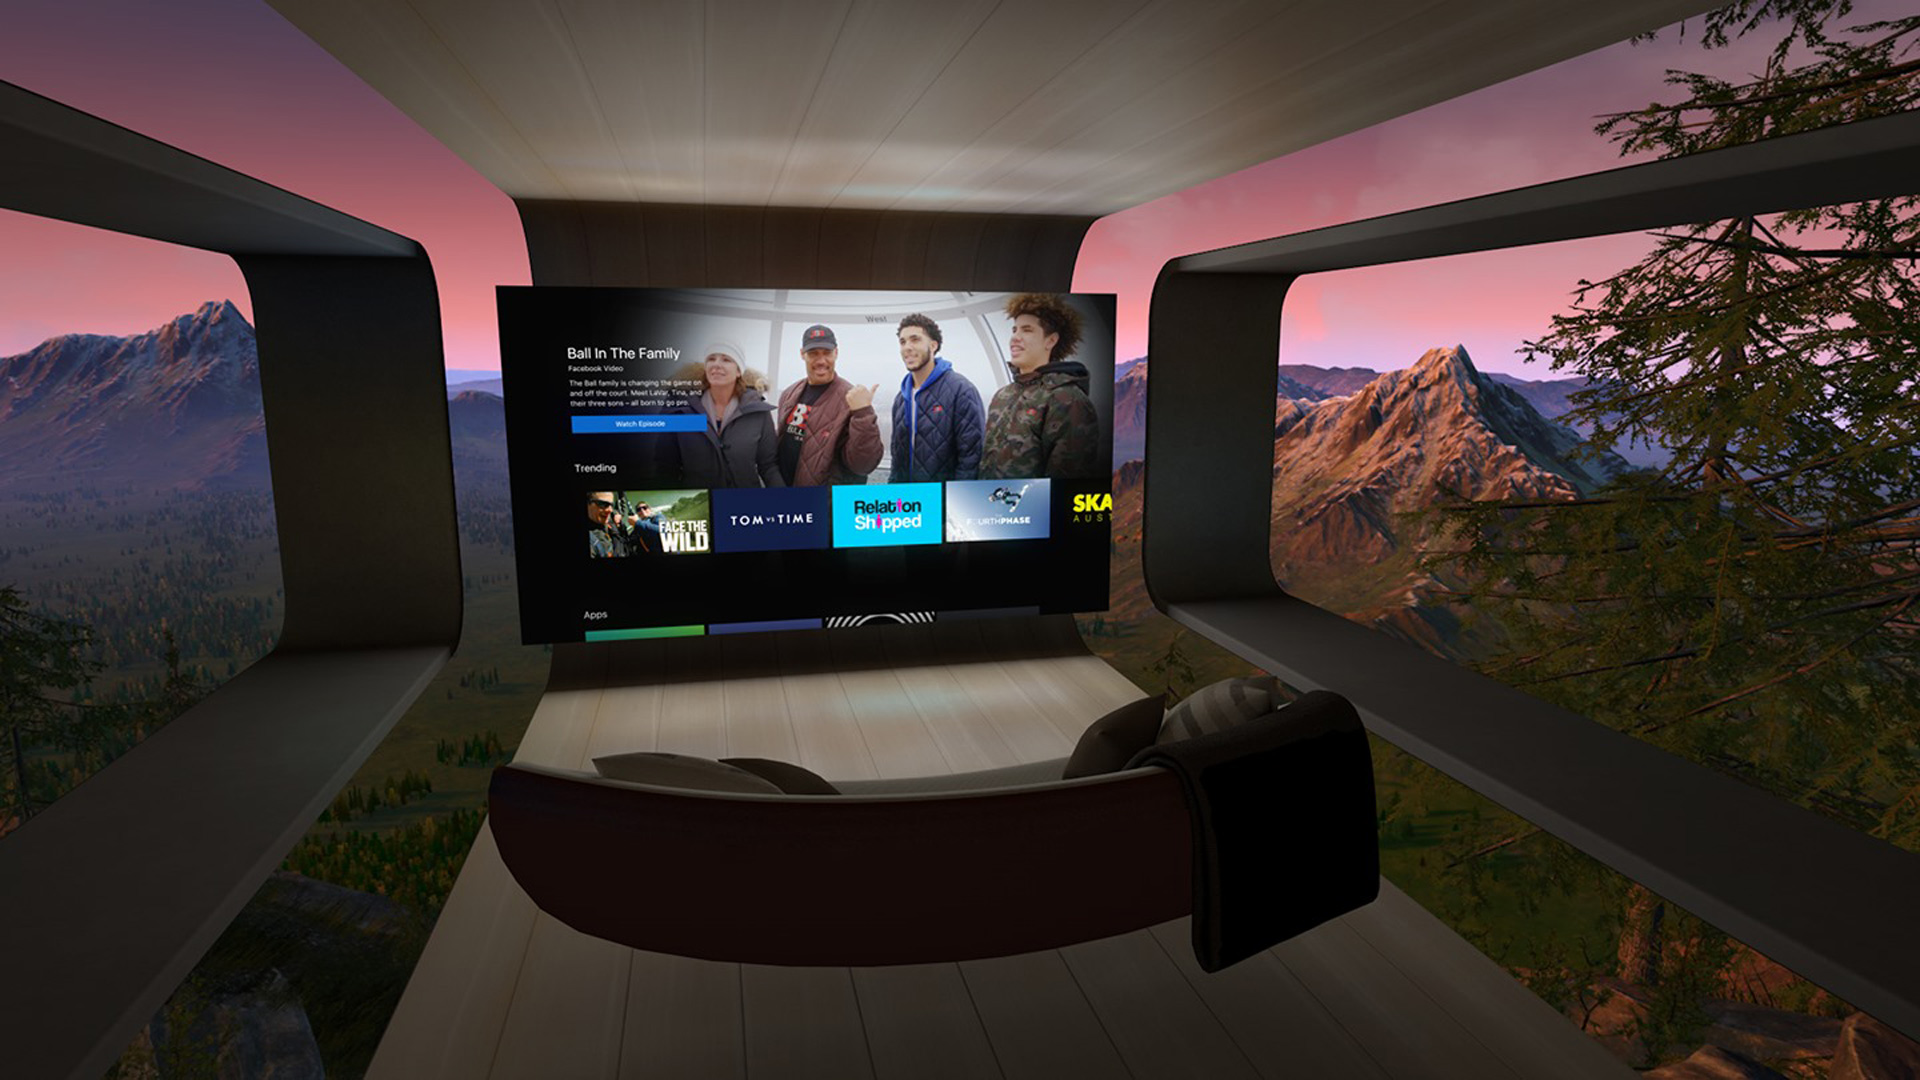 Oculus TV' Brings Live \u0026 On-demand 